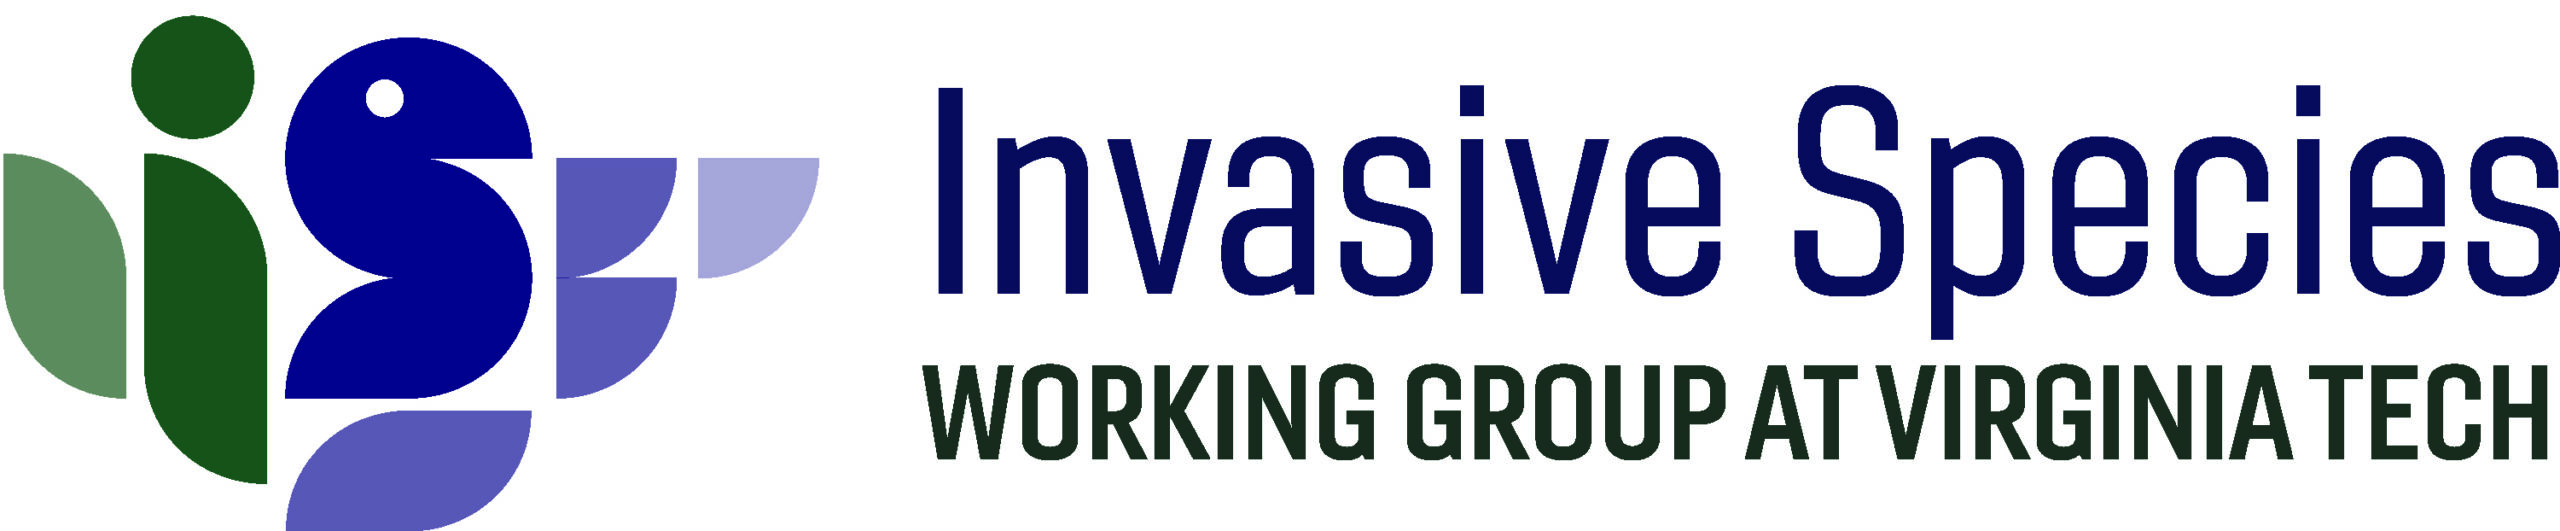 Invasive Species Collaborative At Virginia Tech